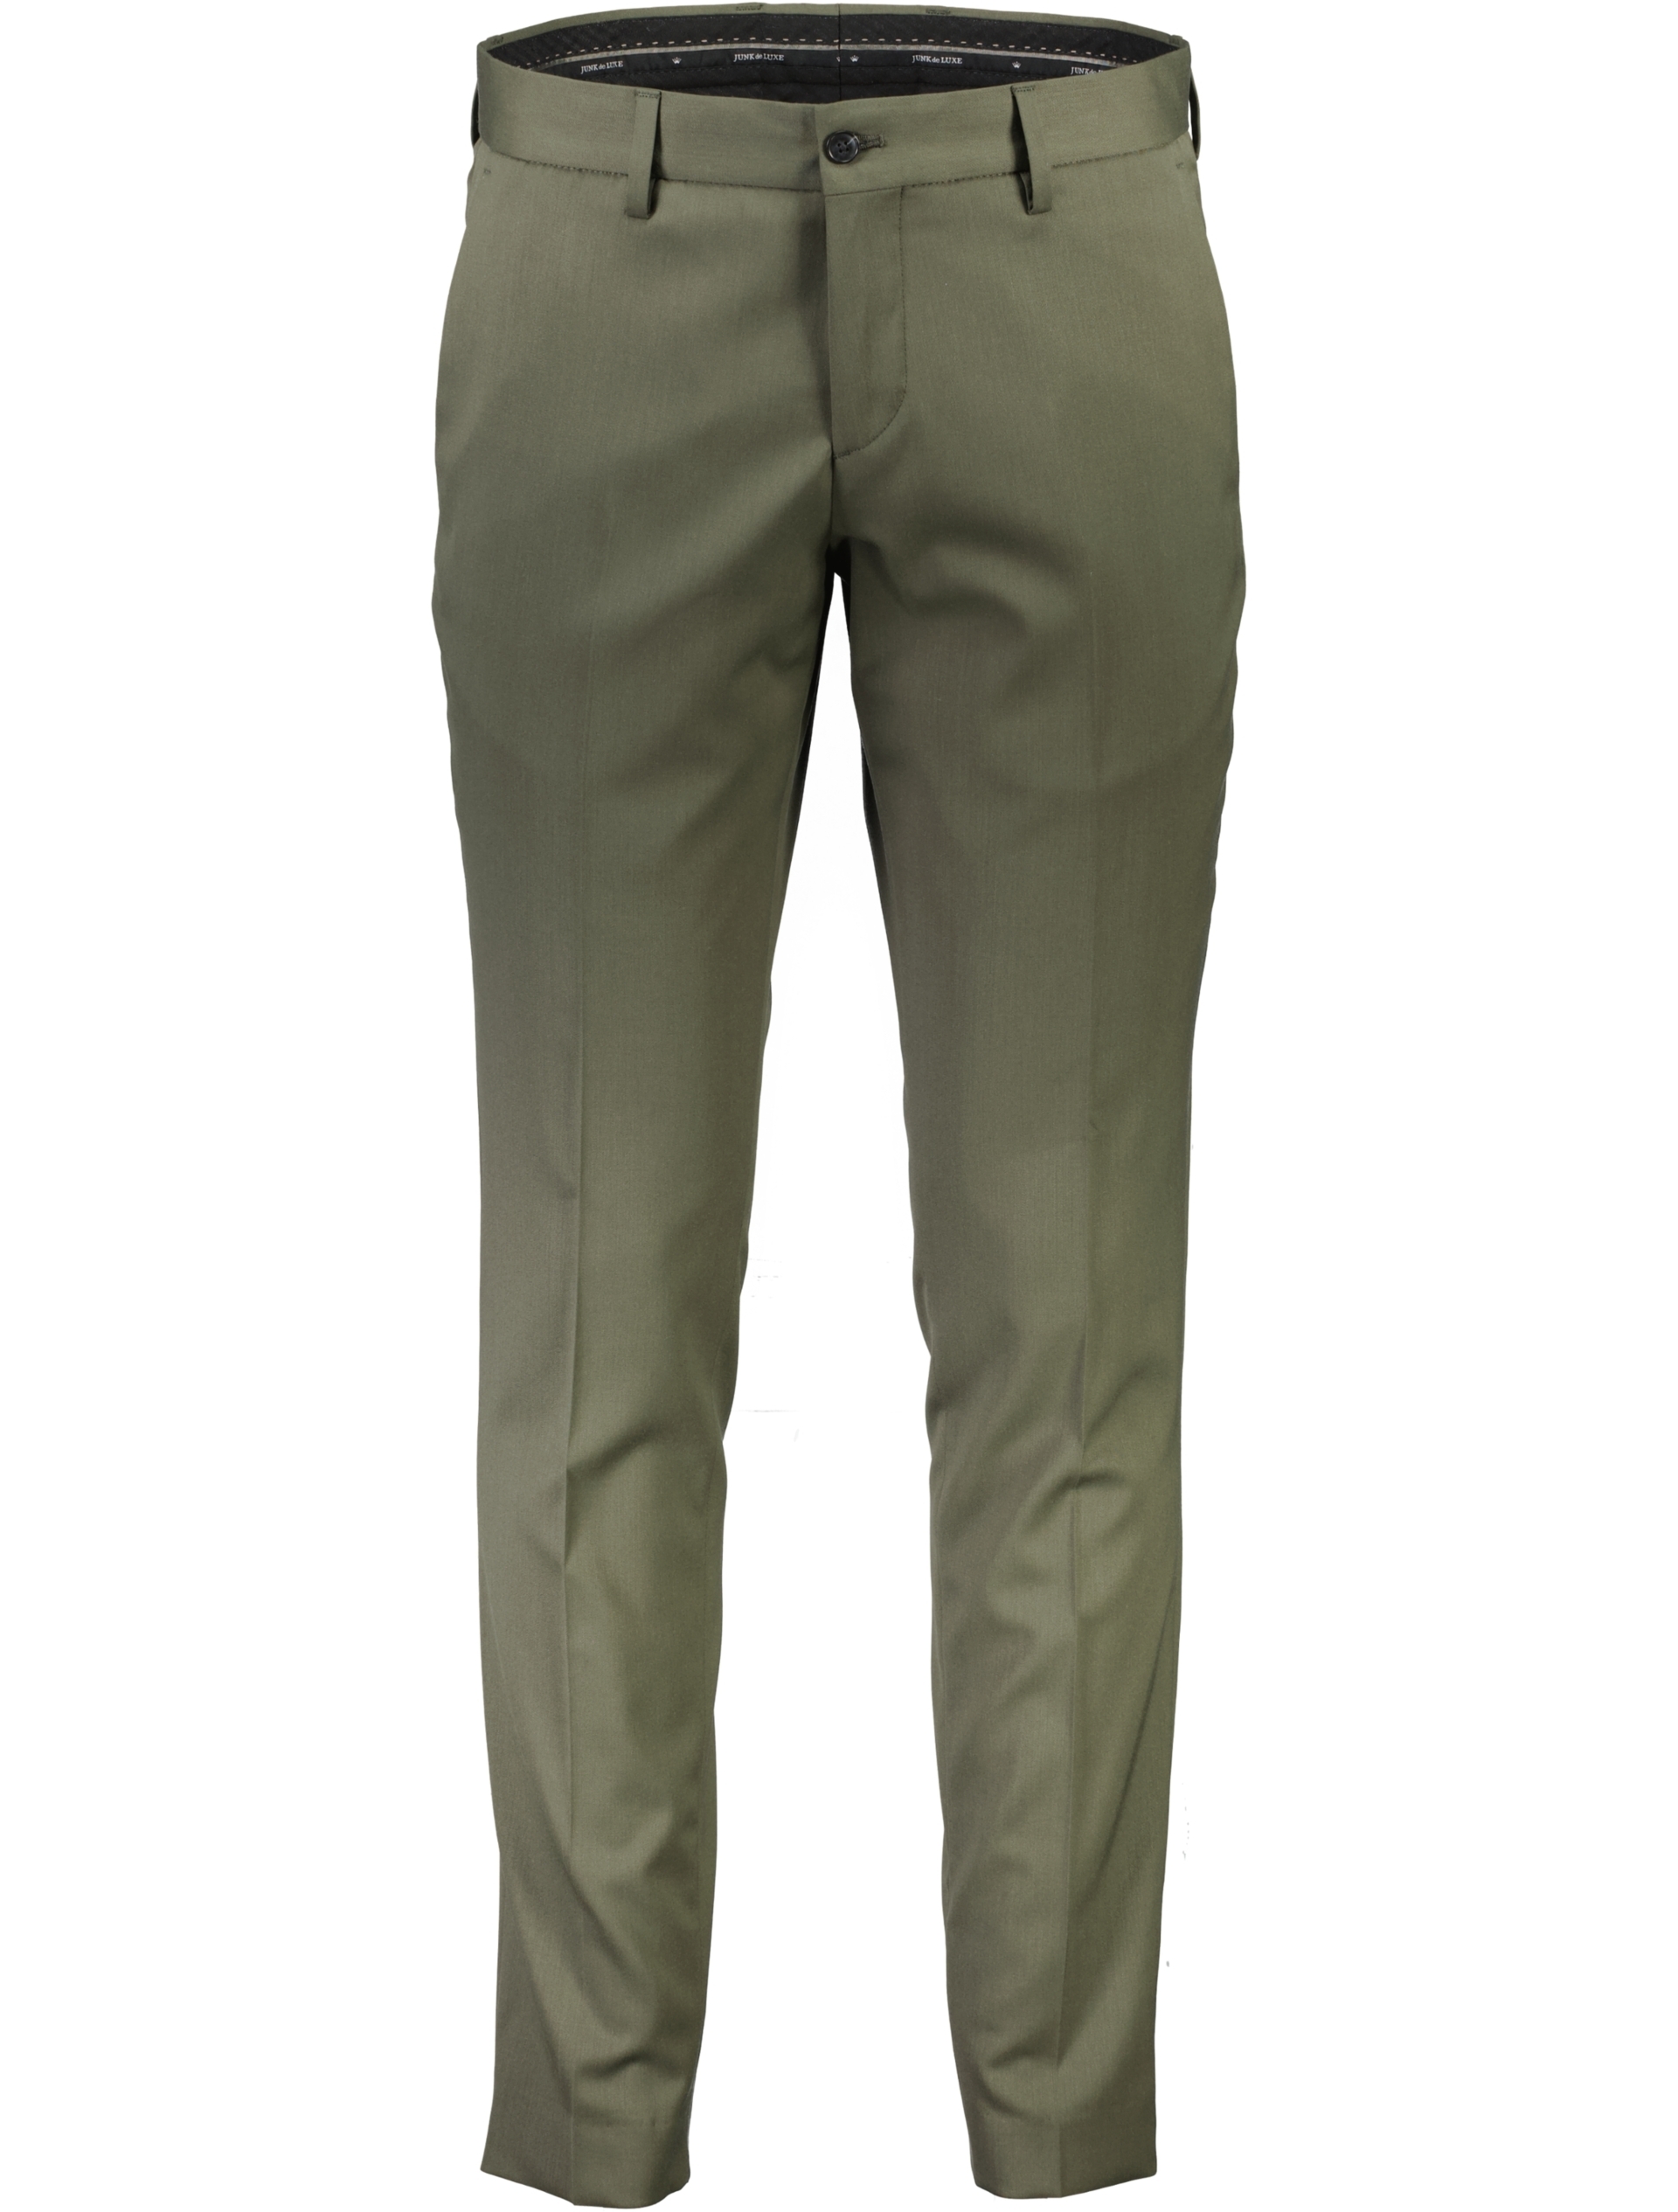 Junk de Luxe Suit pants green / army